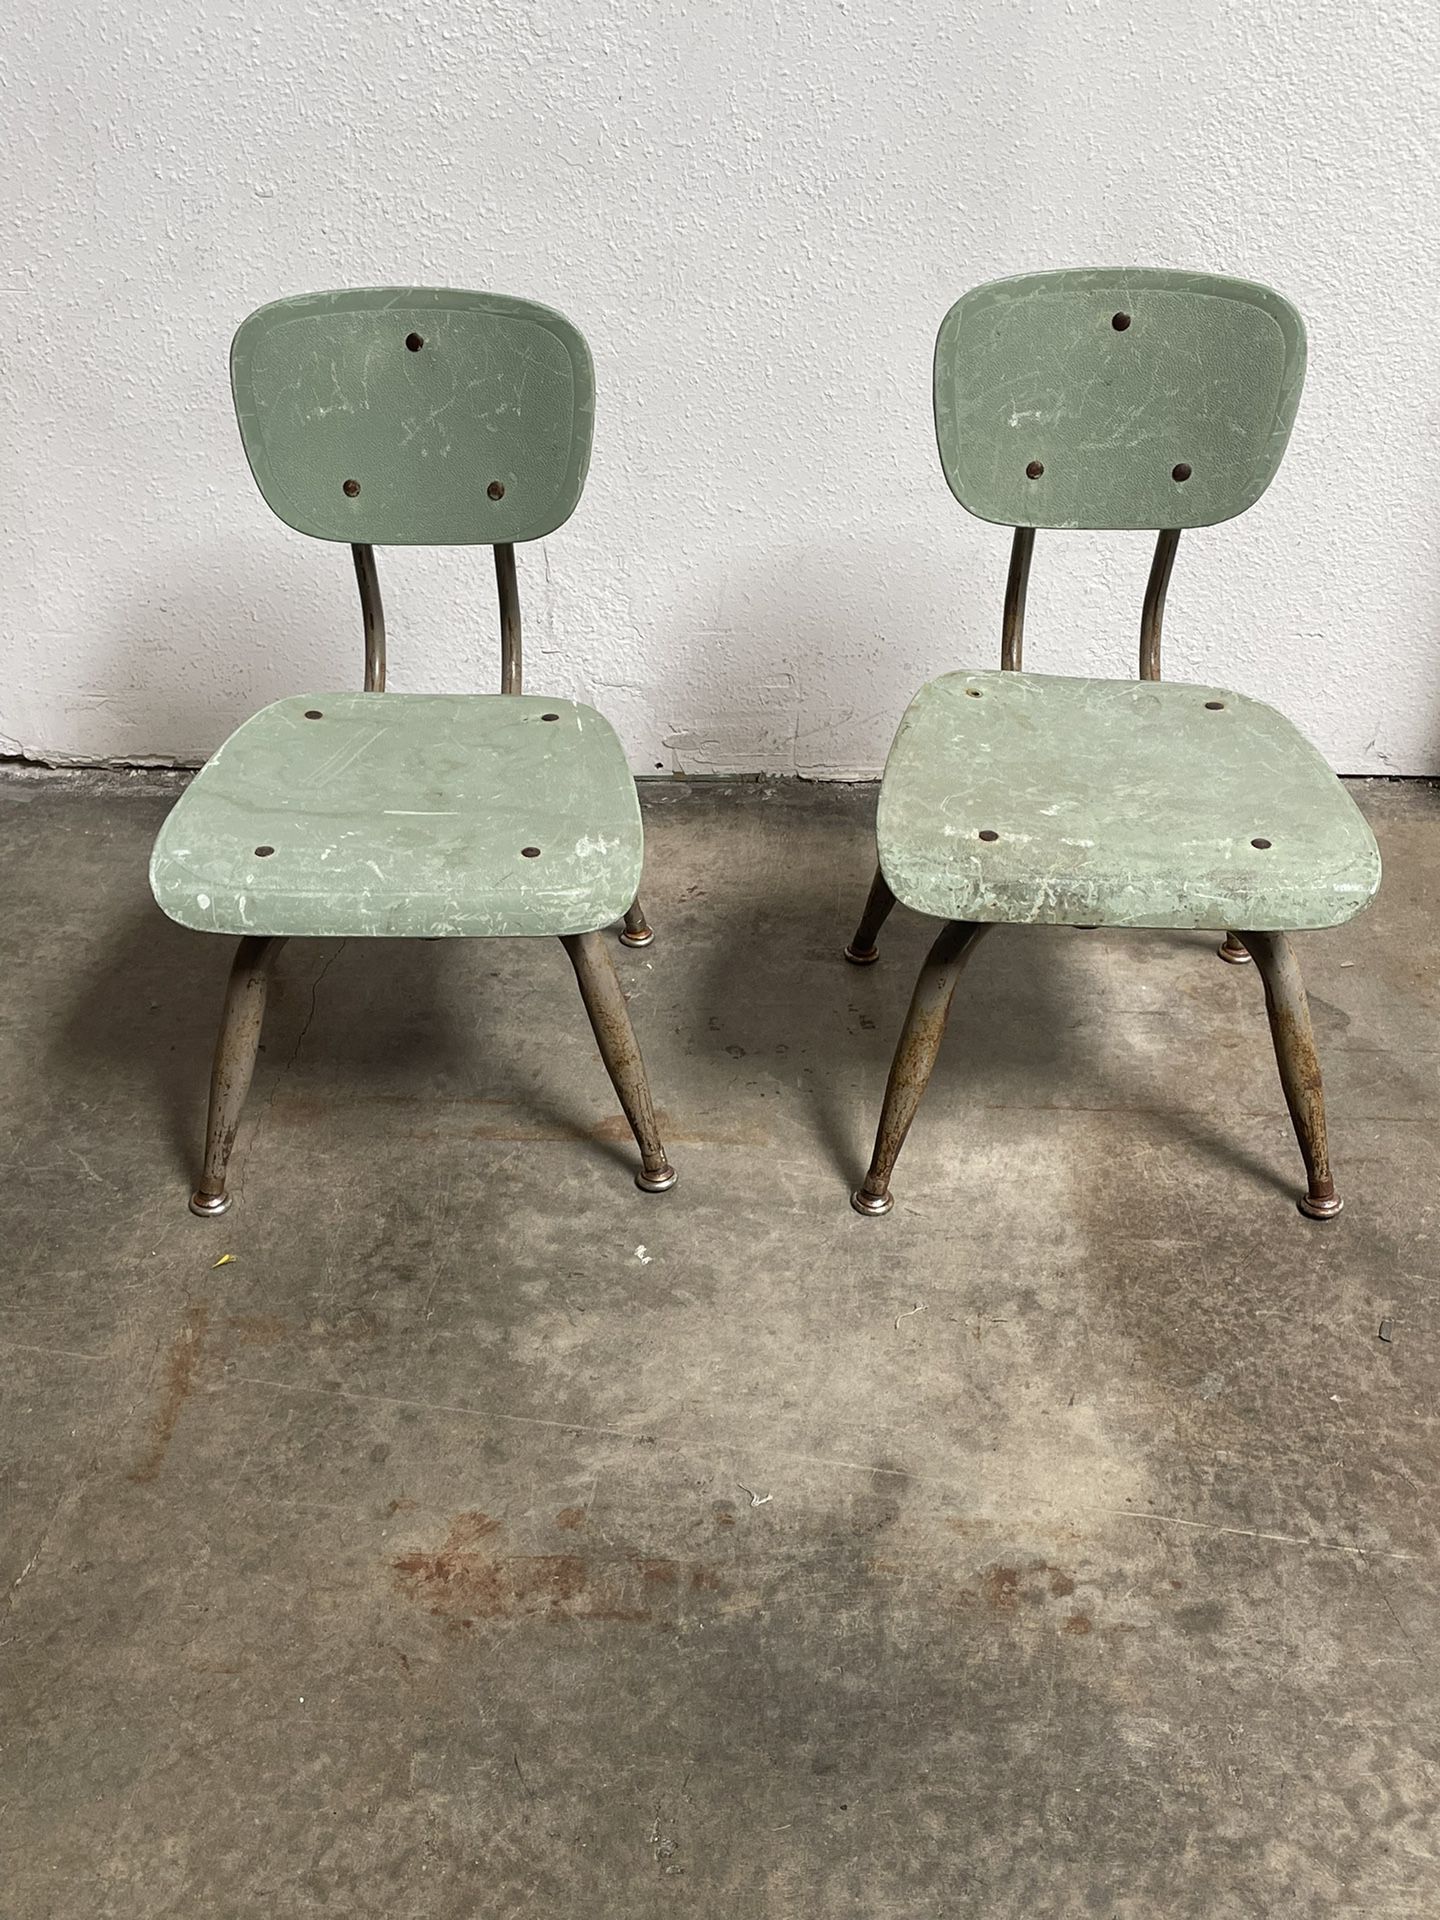 Set Of 2 Vintage Children’s Chairs 